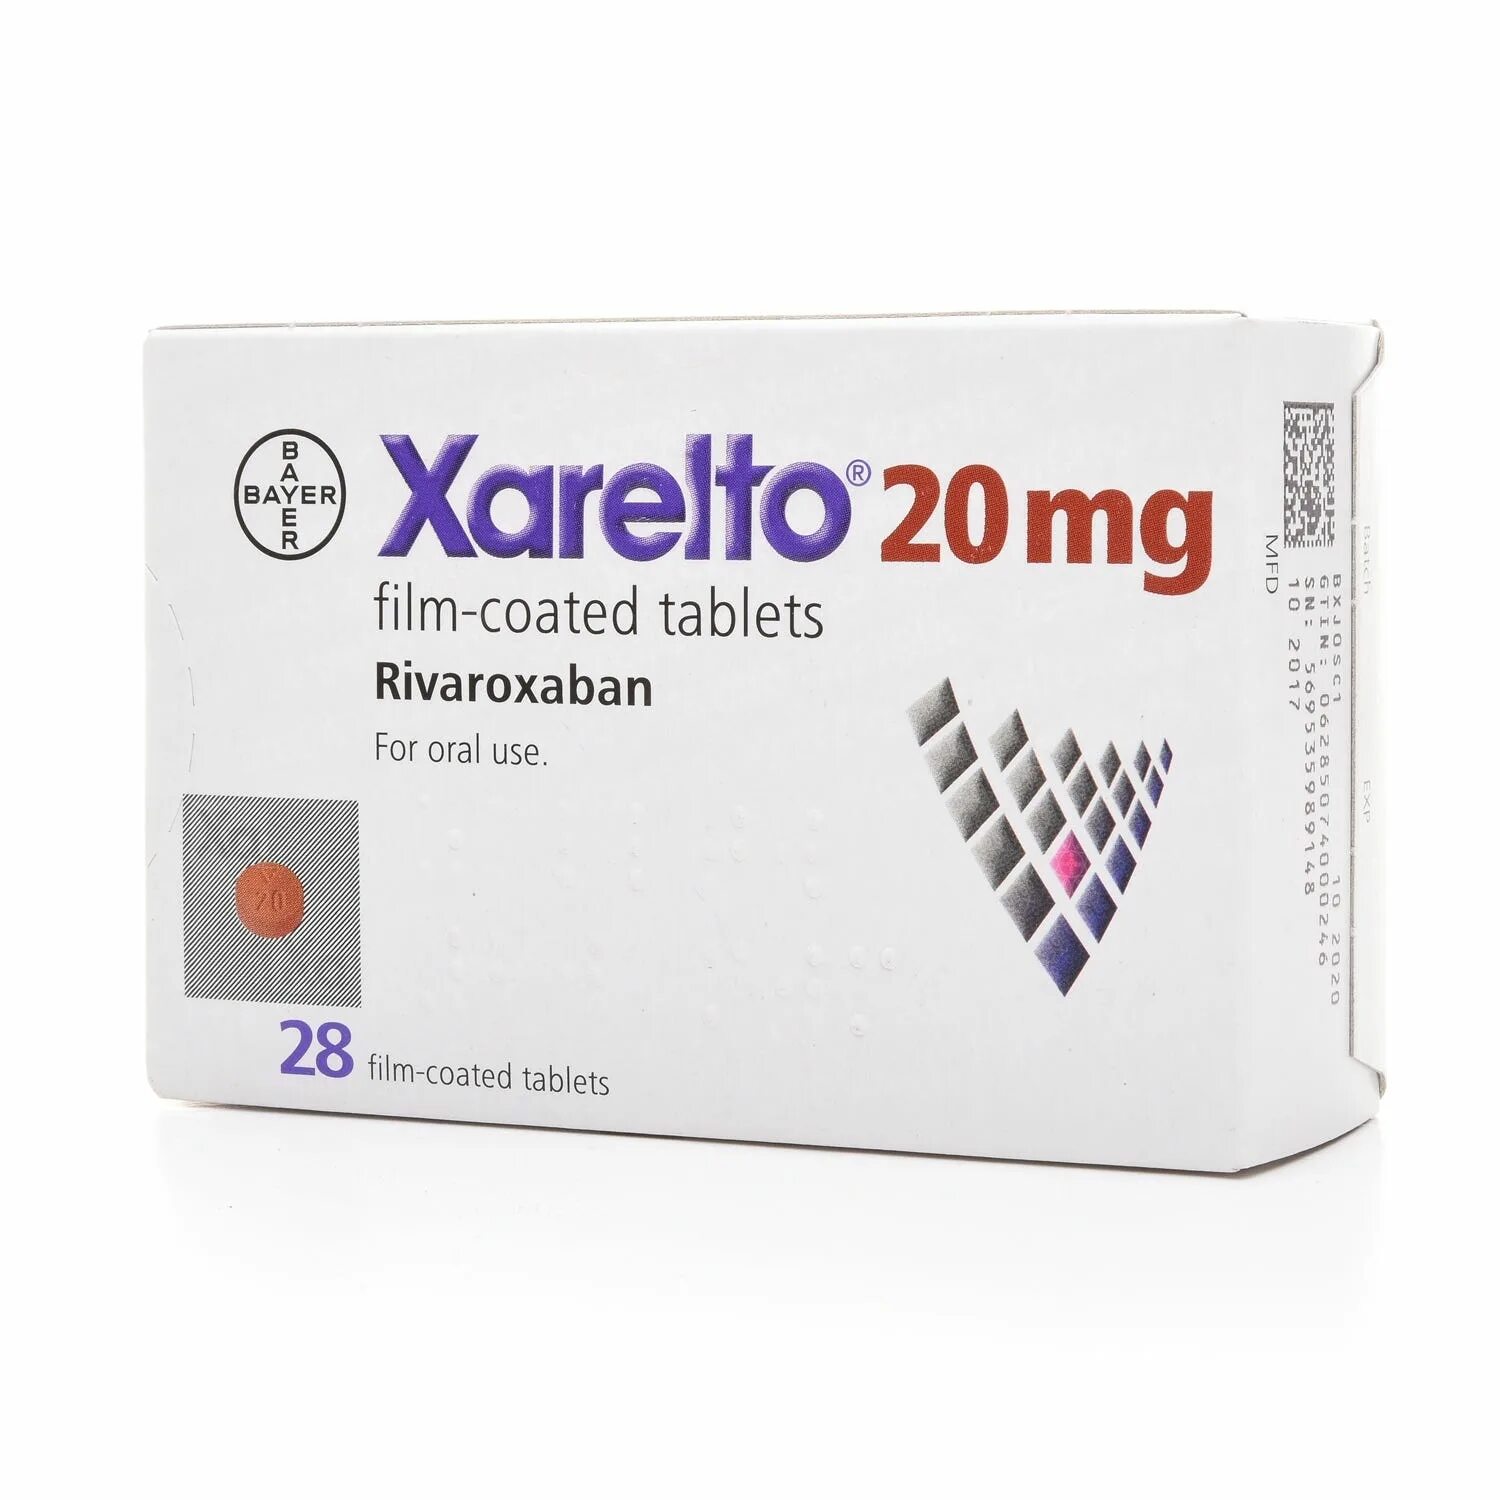 Ксарелто аптека ру. Ксарелто ривароксабан 20мг. Rivaroxaban Tablets Xarelto 20 MG. Ривароксабан 2.5 мг. Ксарелто 20 мг турецкий.